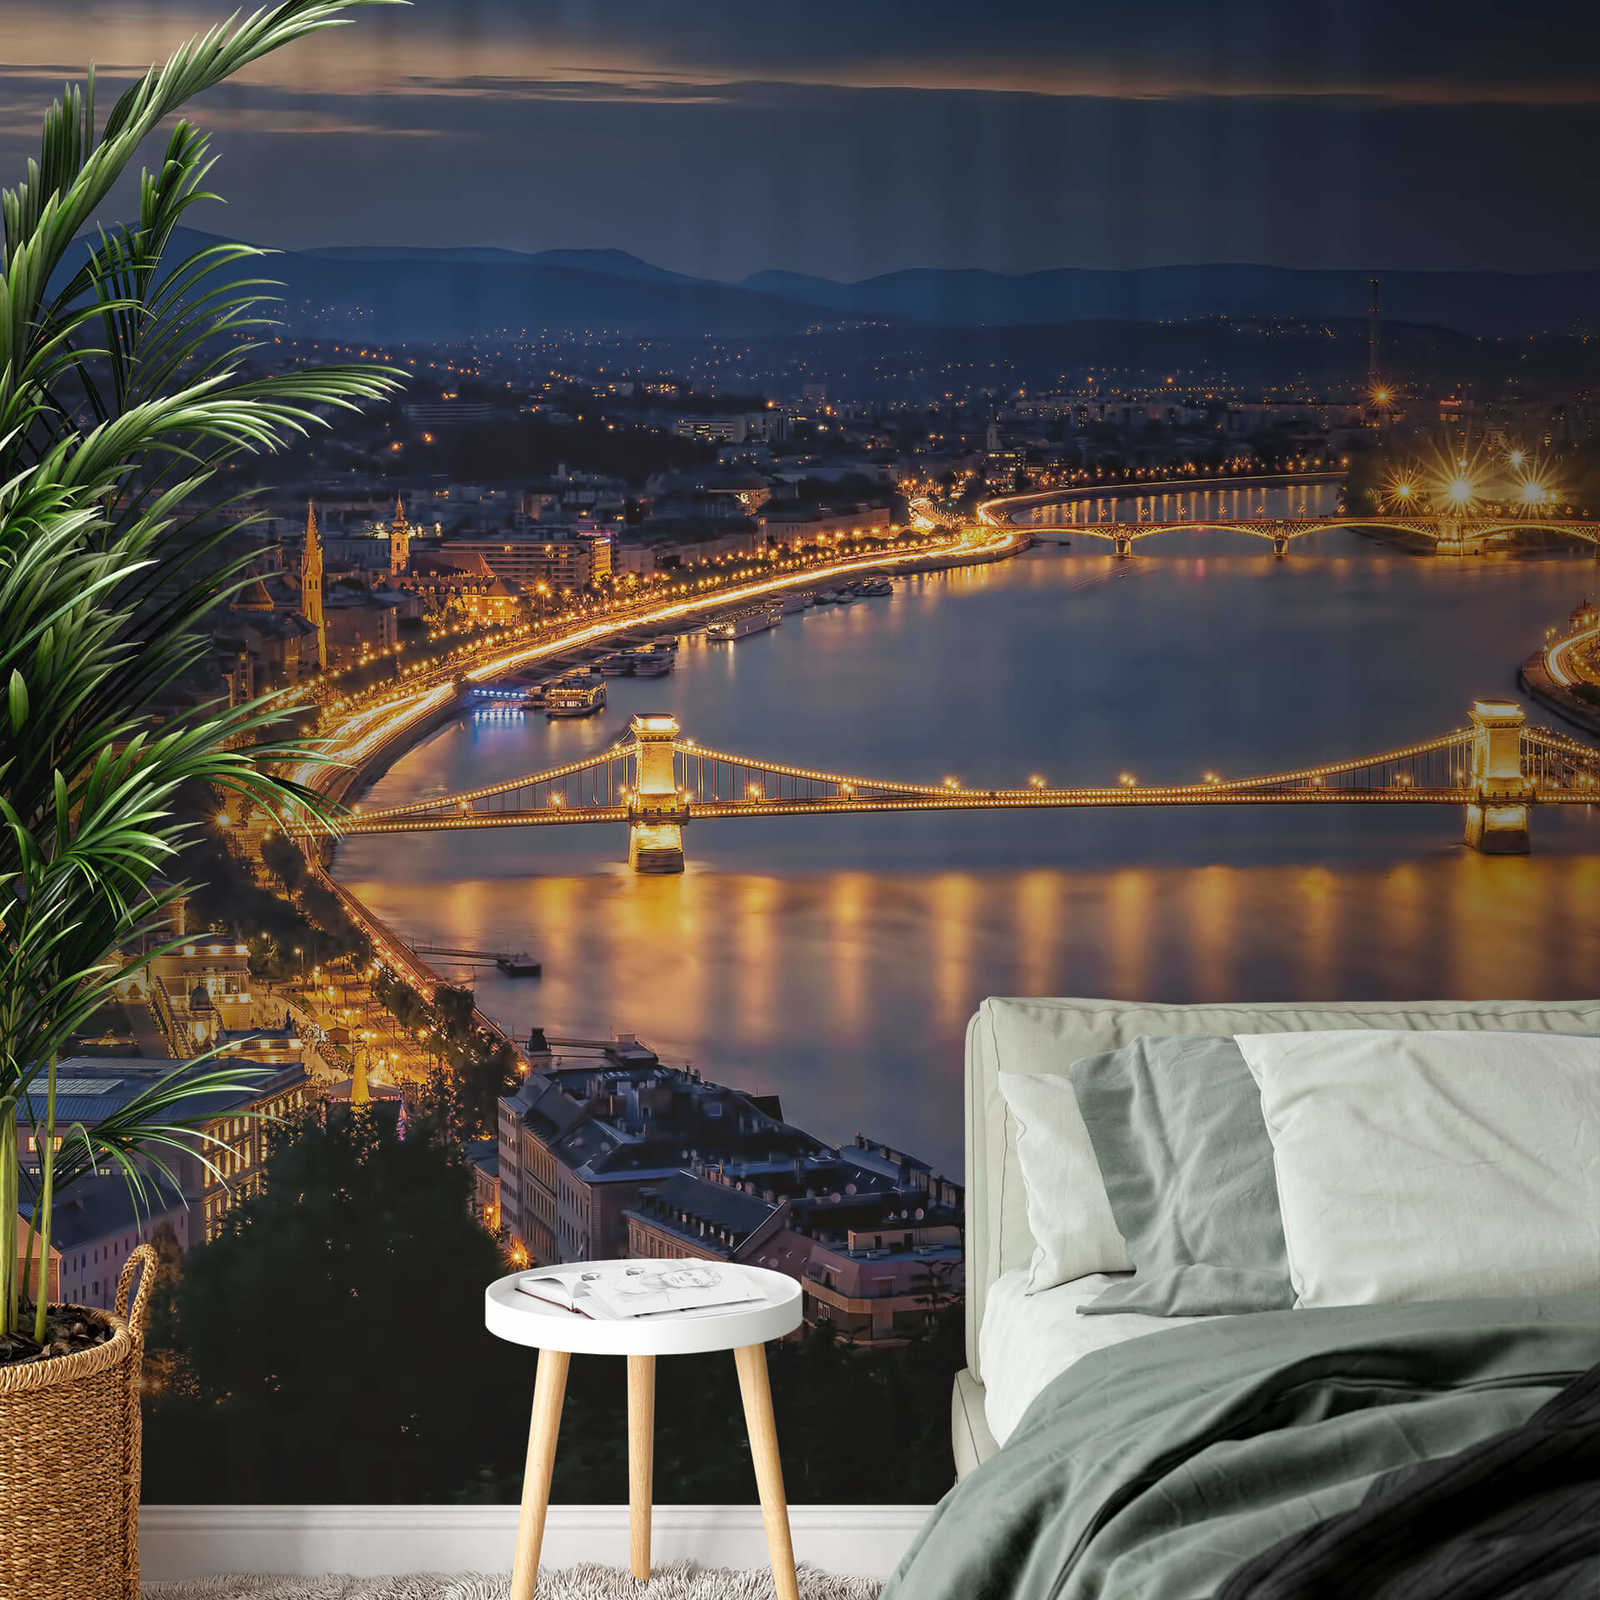             Photo wallpaper Budapest city at night - yellow, blue, white
        